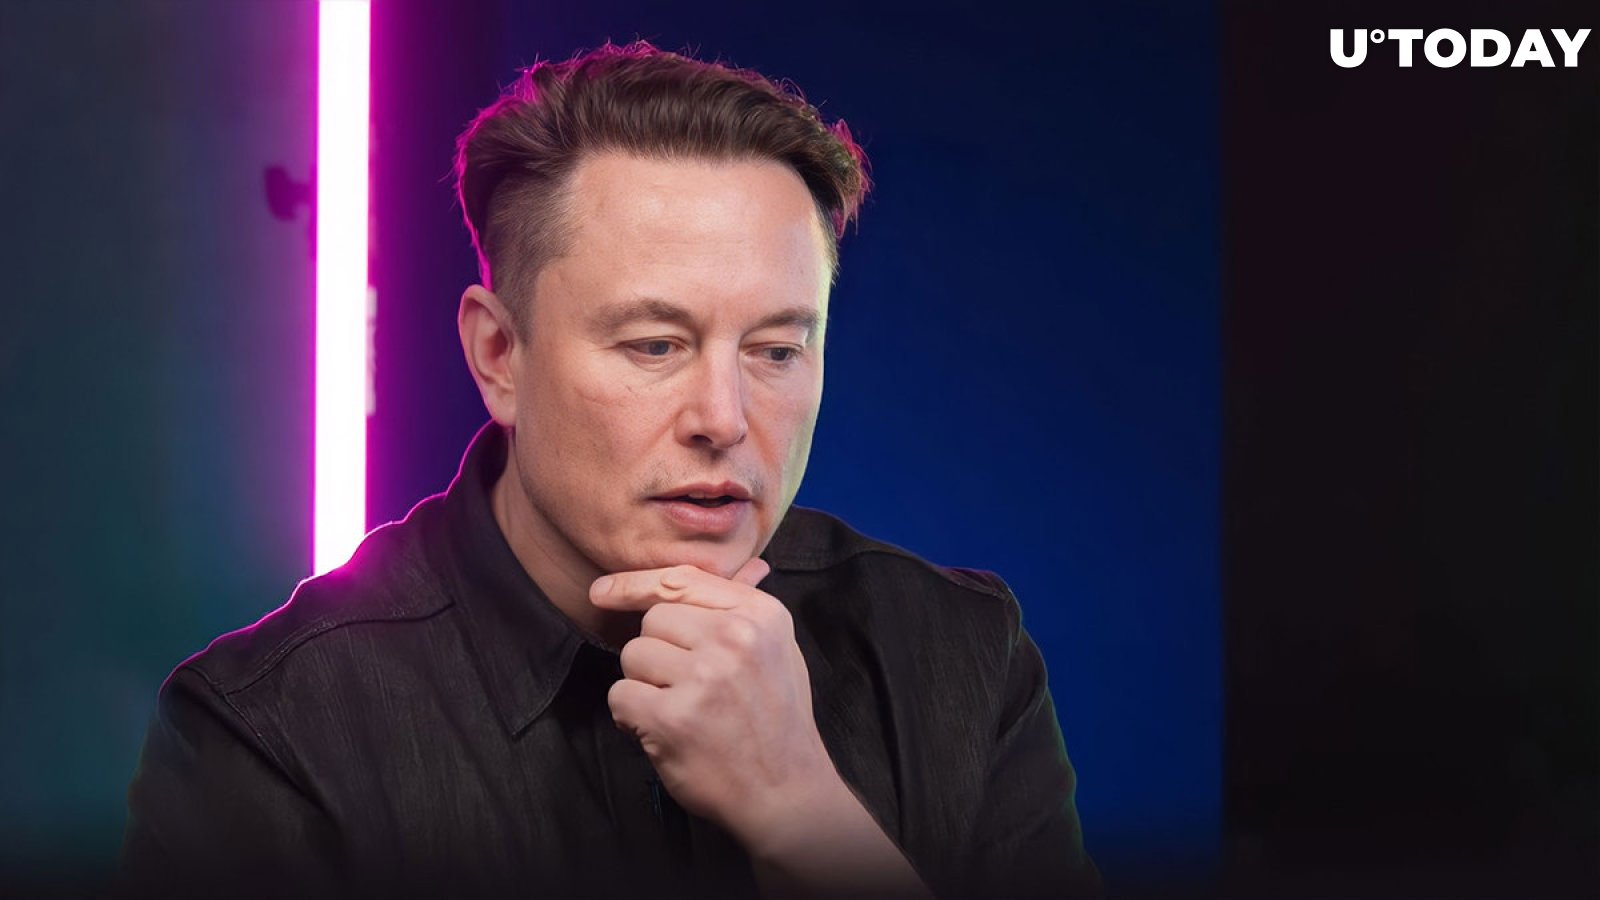 Elon Musk-Shytoshi Kusama Identity Rumor Clarified Once and for All: Details